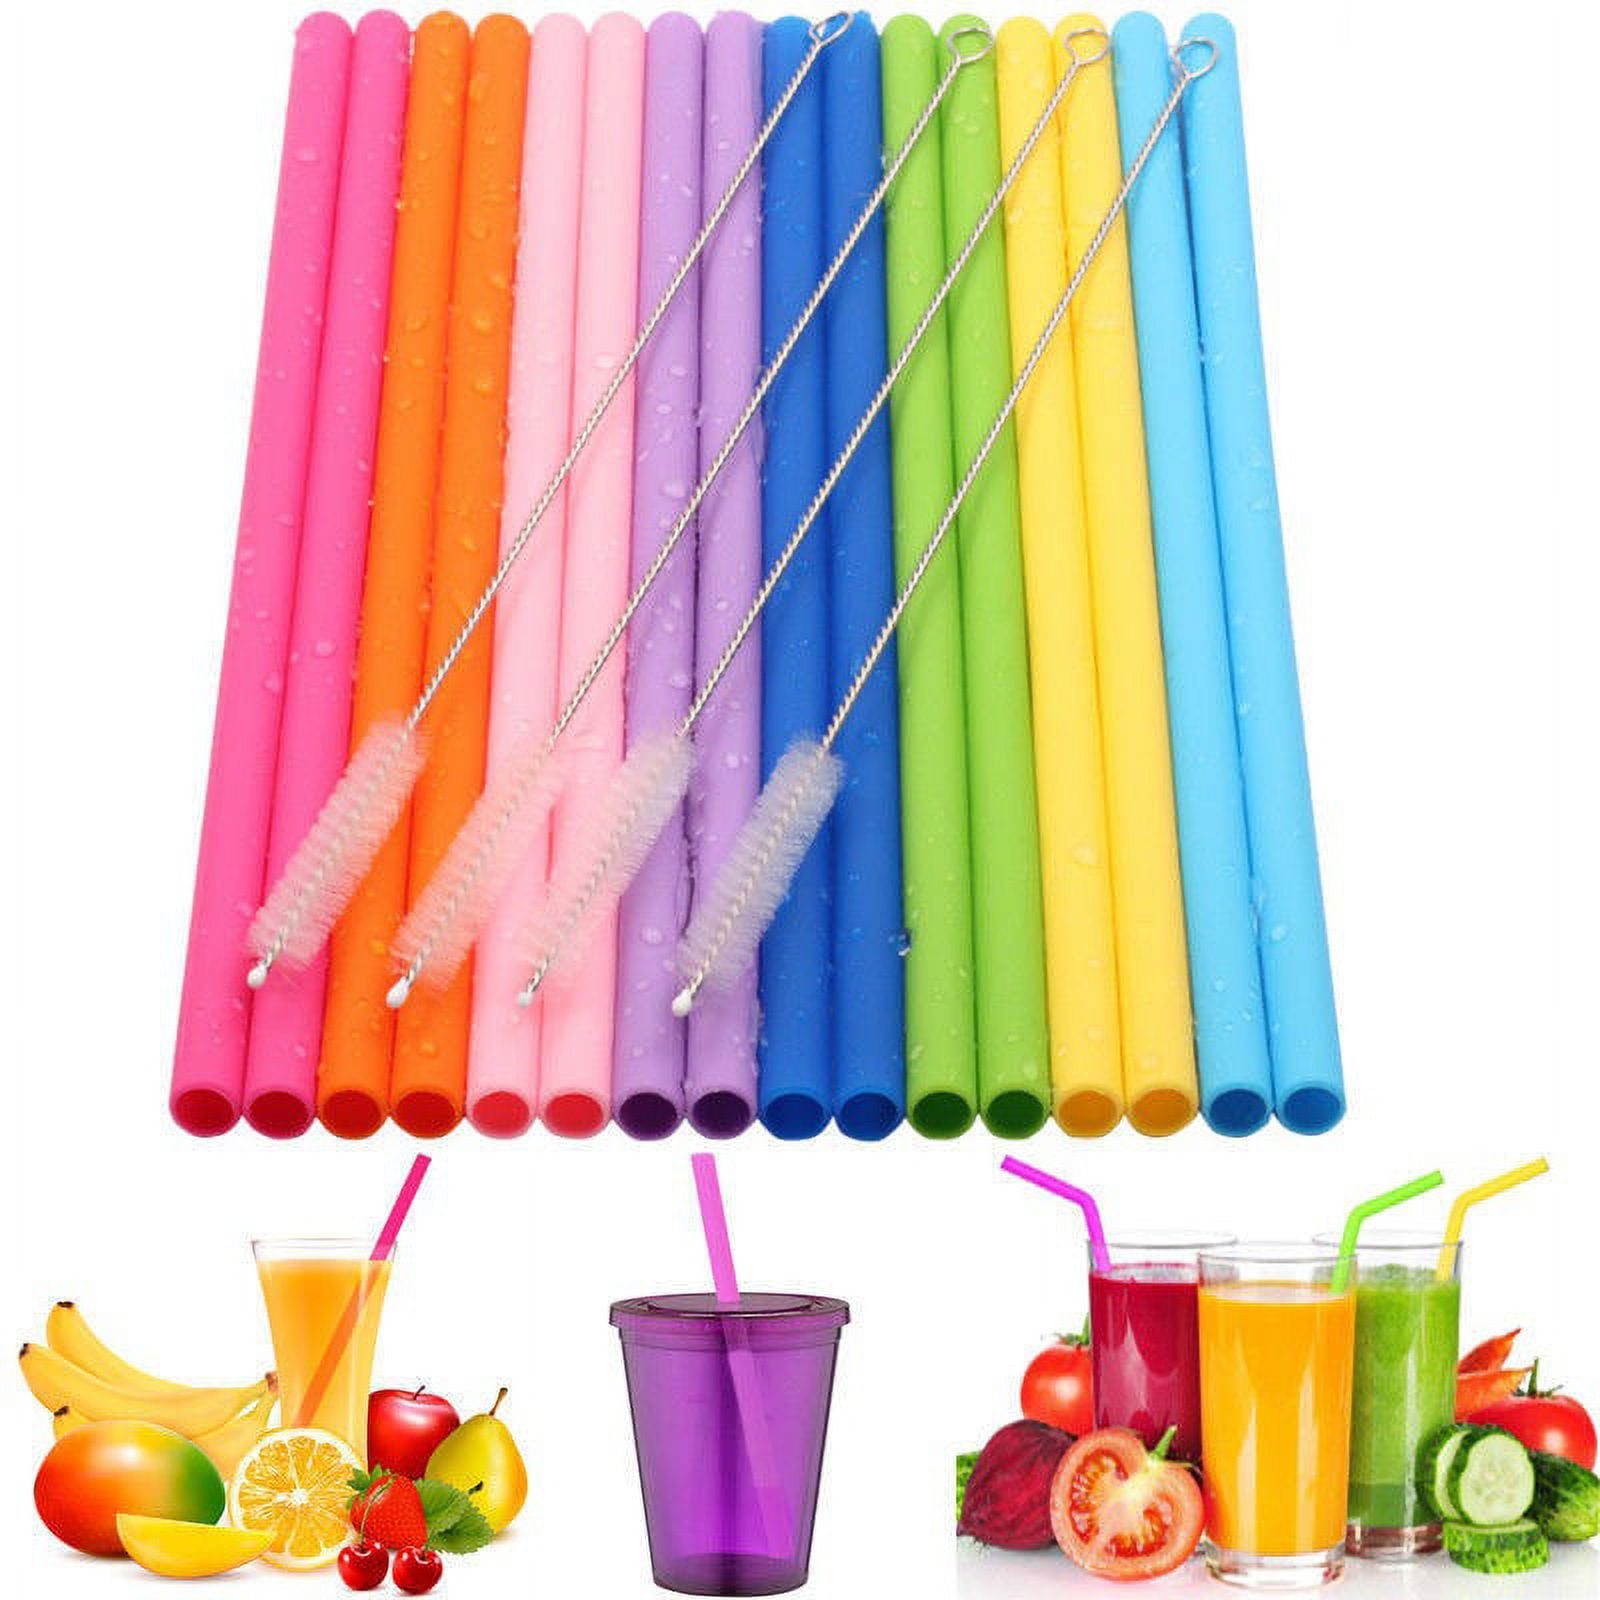 Juice & Smoothie Silicone Straw Set